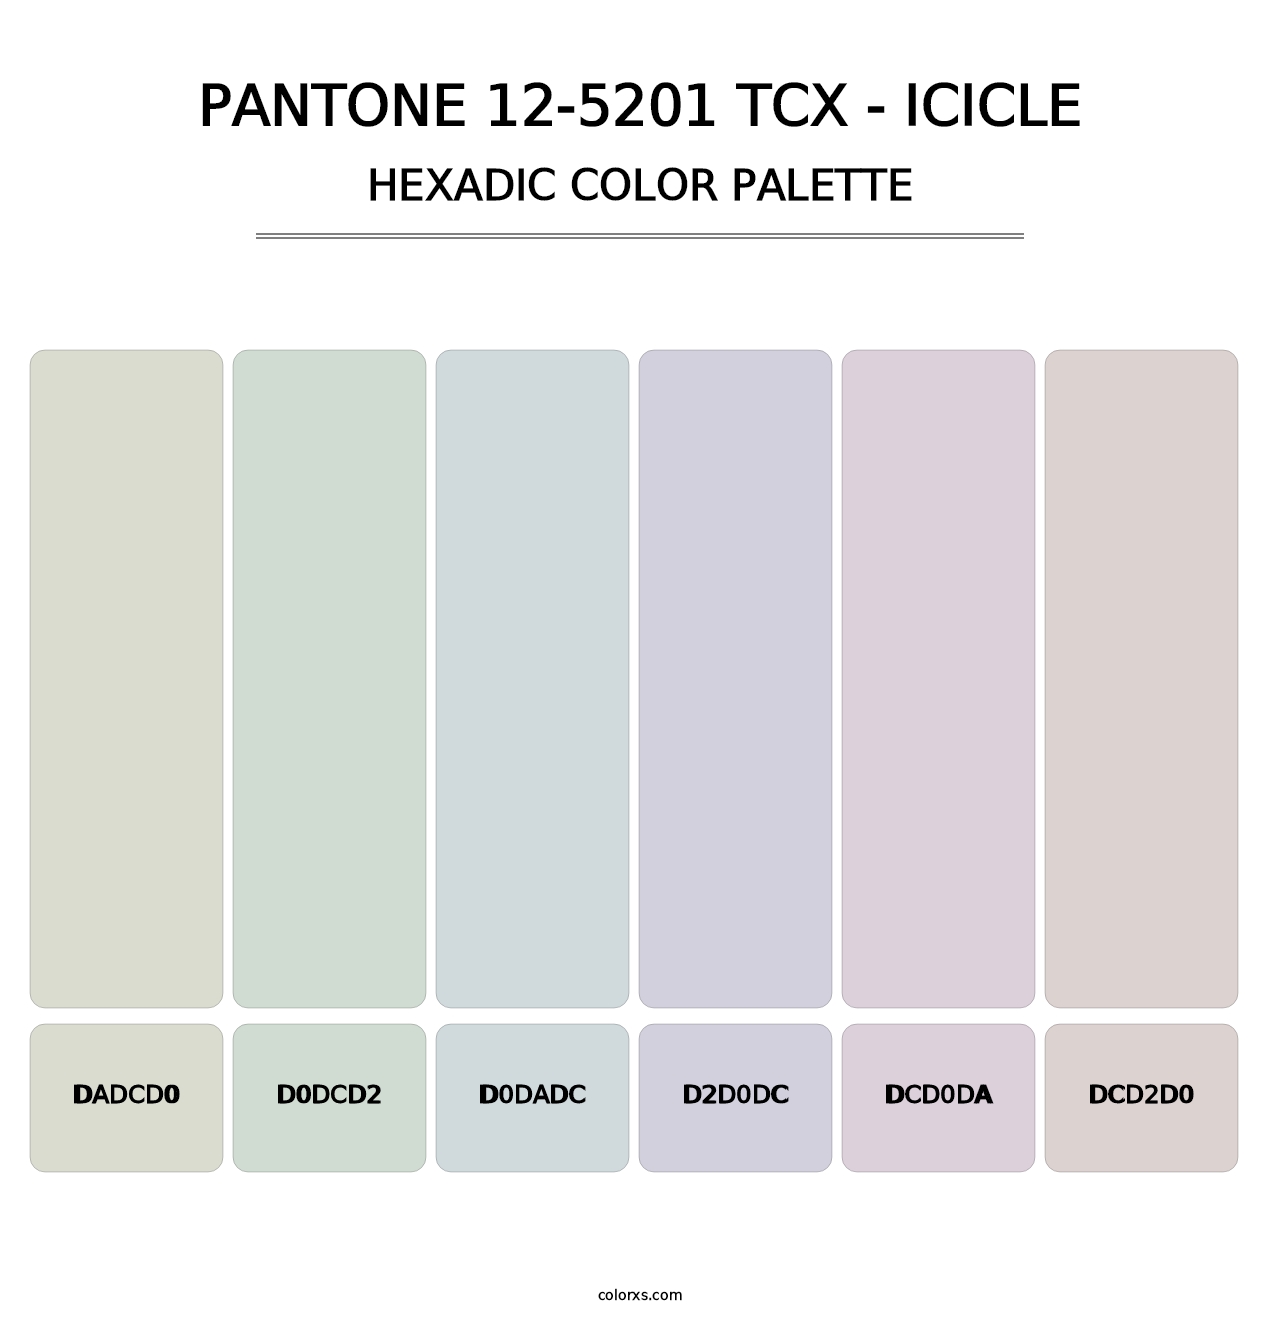 PANTONE 12-5201 TCX - Icicle - Hexadic Color Palette